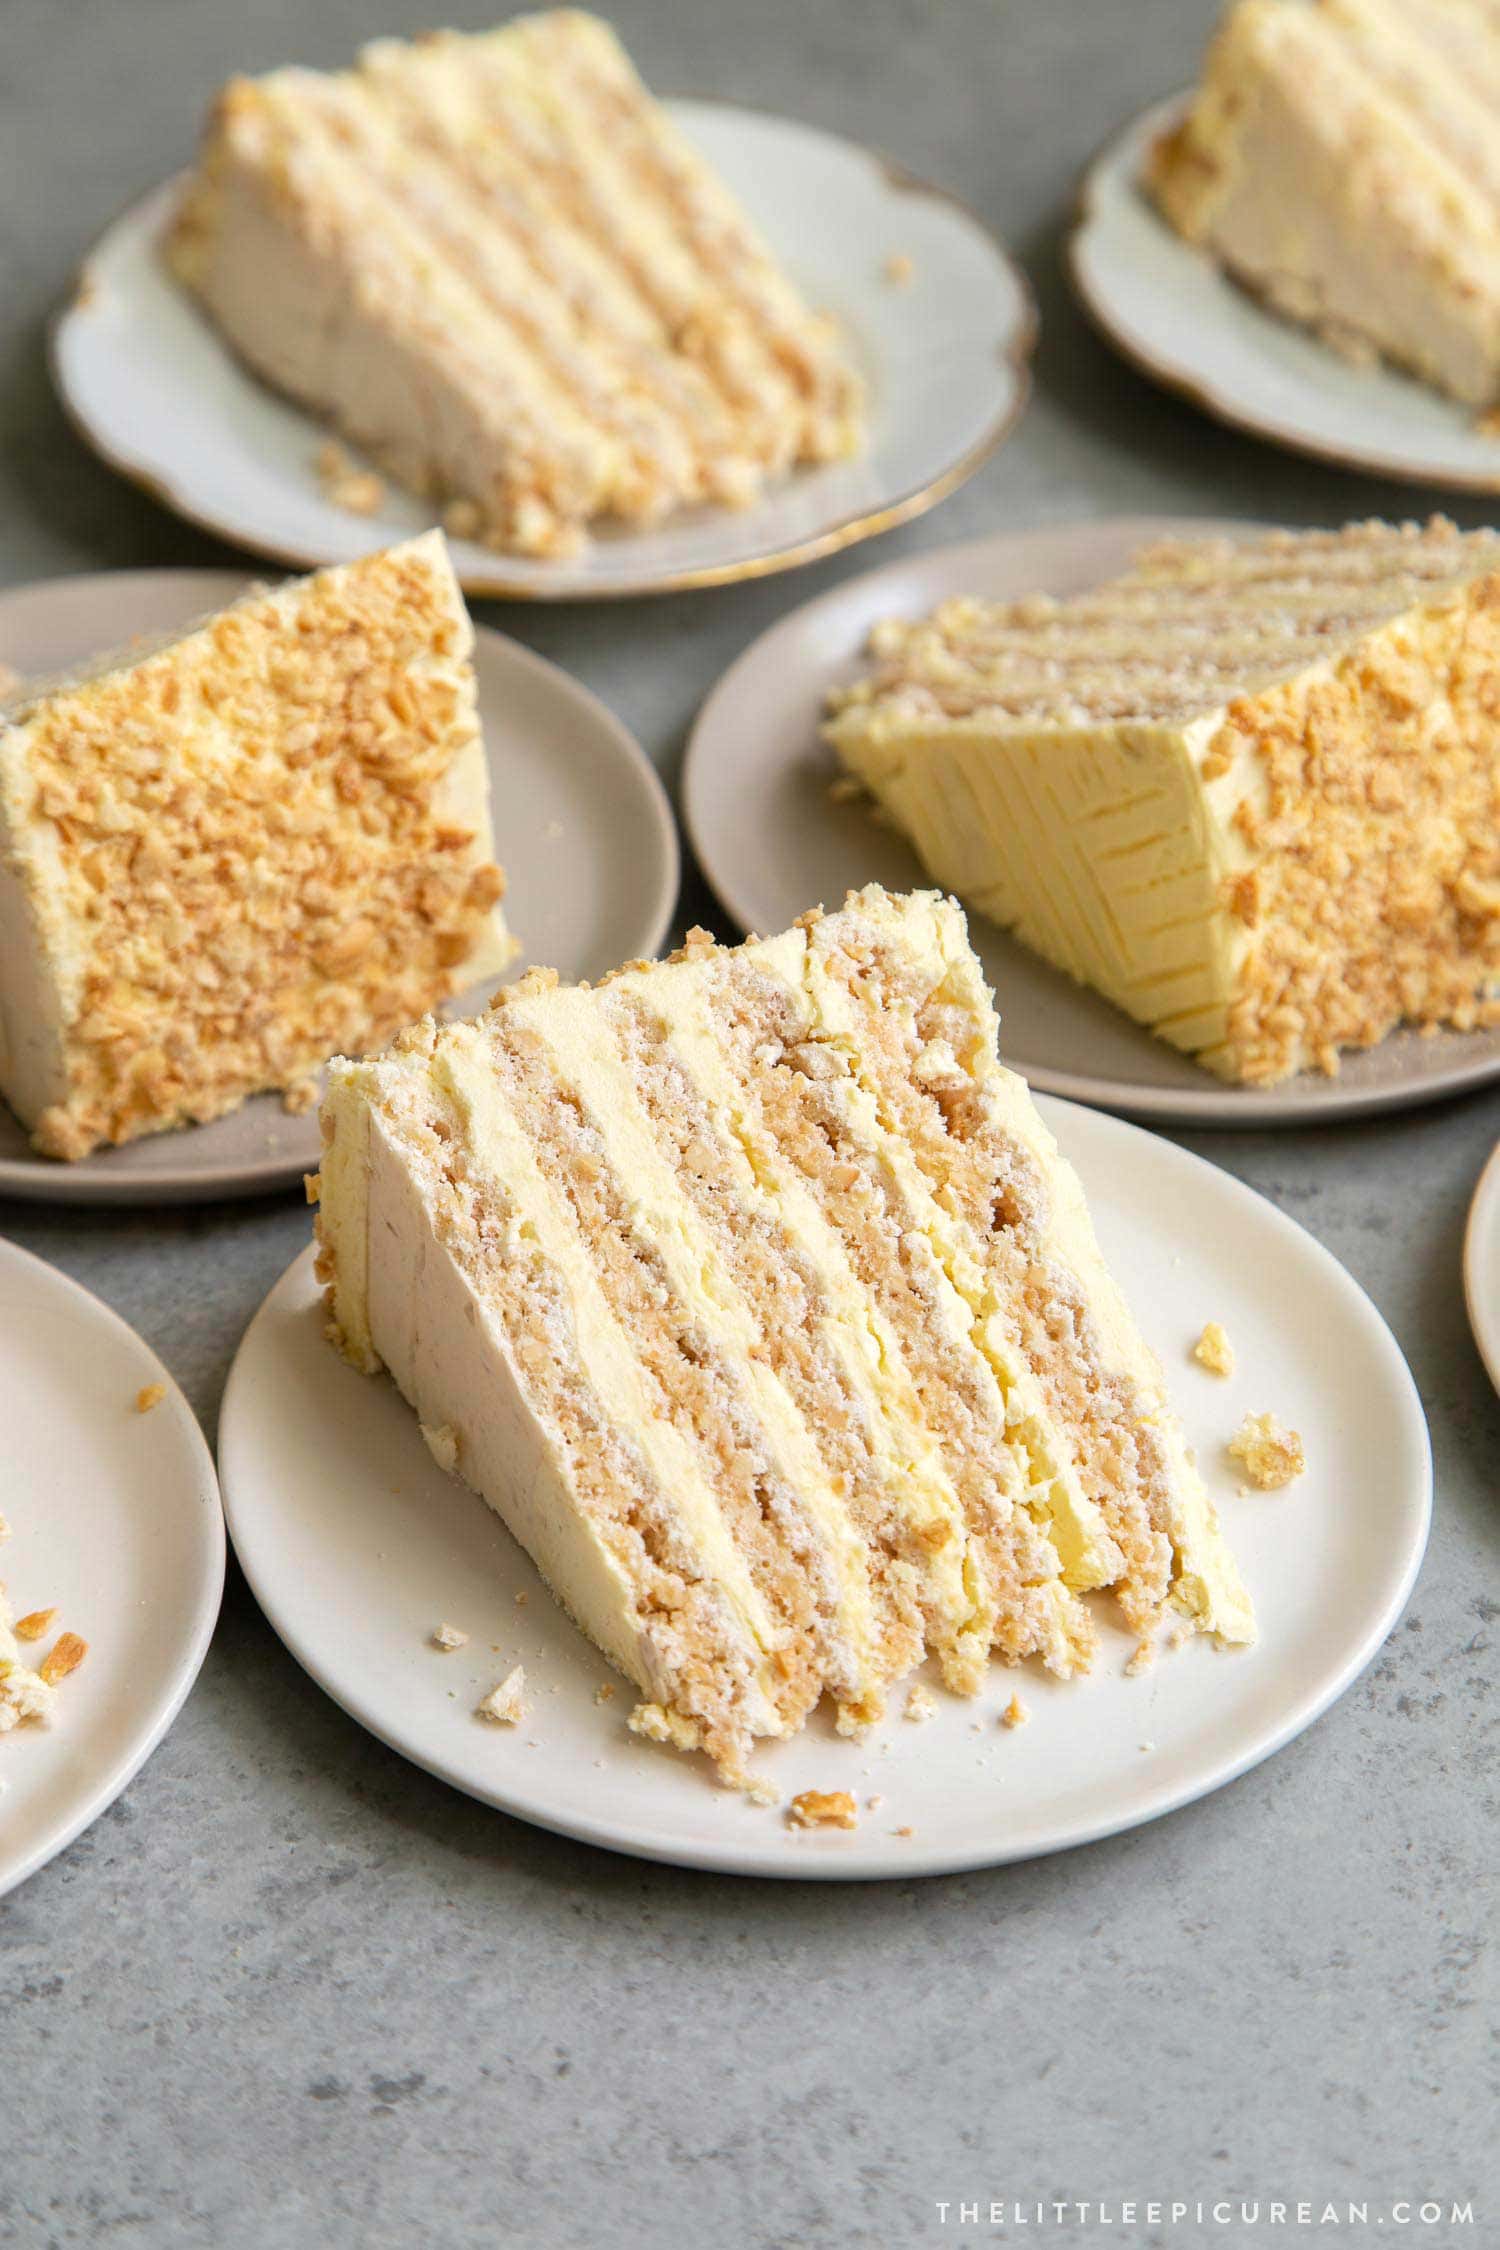 Sans Rival cake slice. Filipino cake consisting of cashew dacquoise layered with French buttercream. #cake #dessert #glutenfree #cashews #buttercream #filipino #filipinodesserts #filipinorecipes